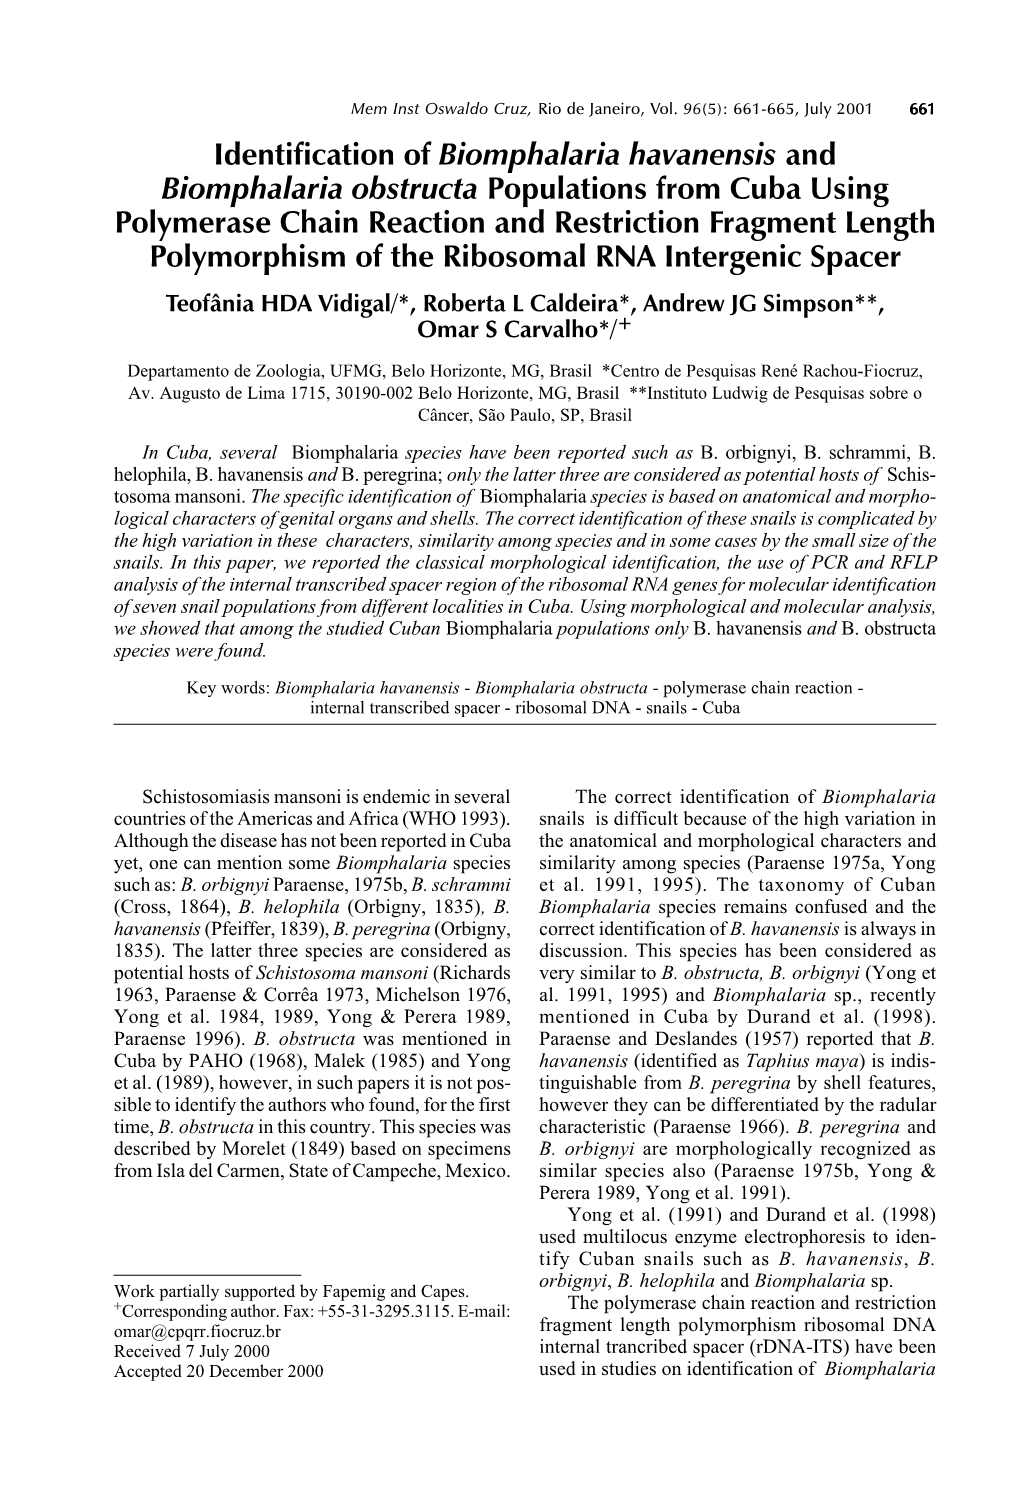 Identification of Biomphalaria Havanensis and Biomphalaria